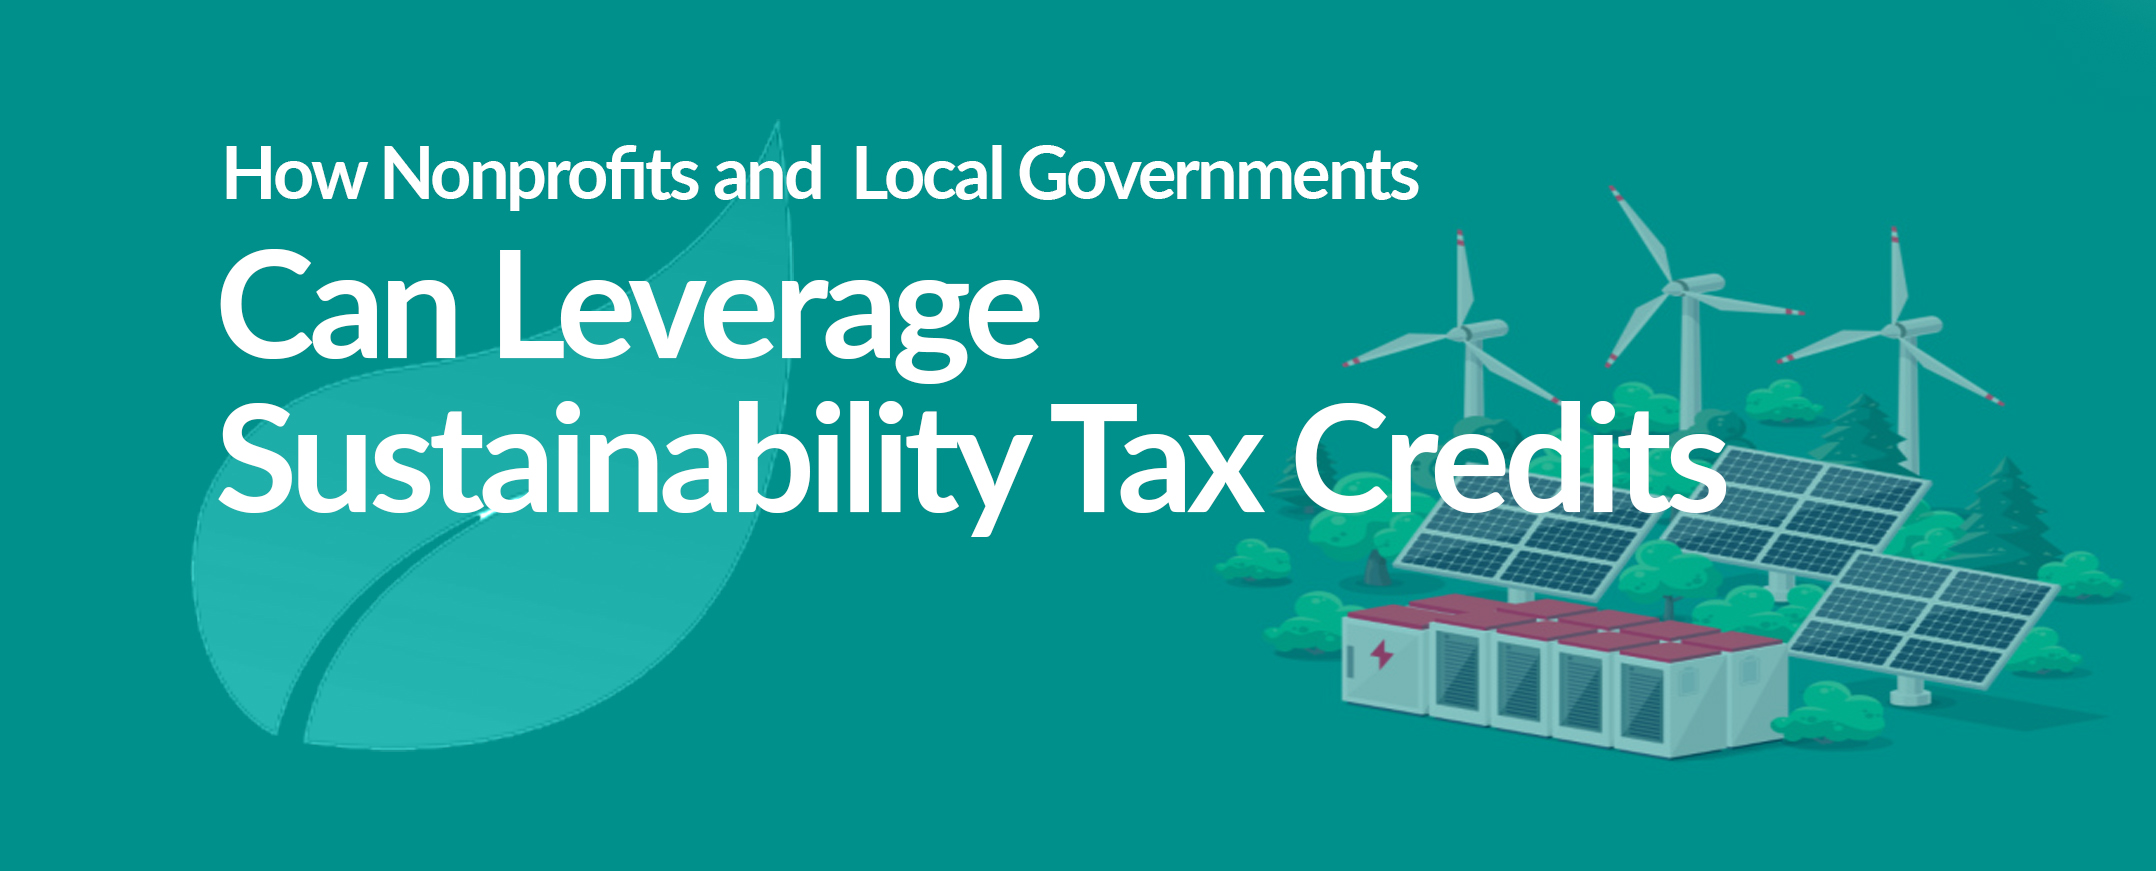 Sustainability Tax Credits